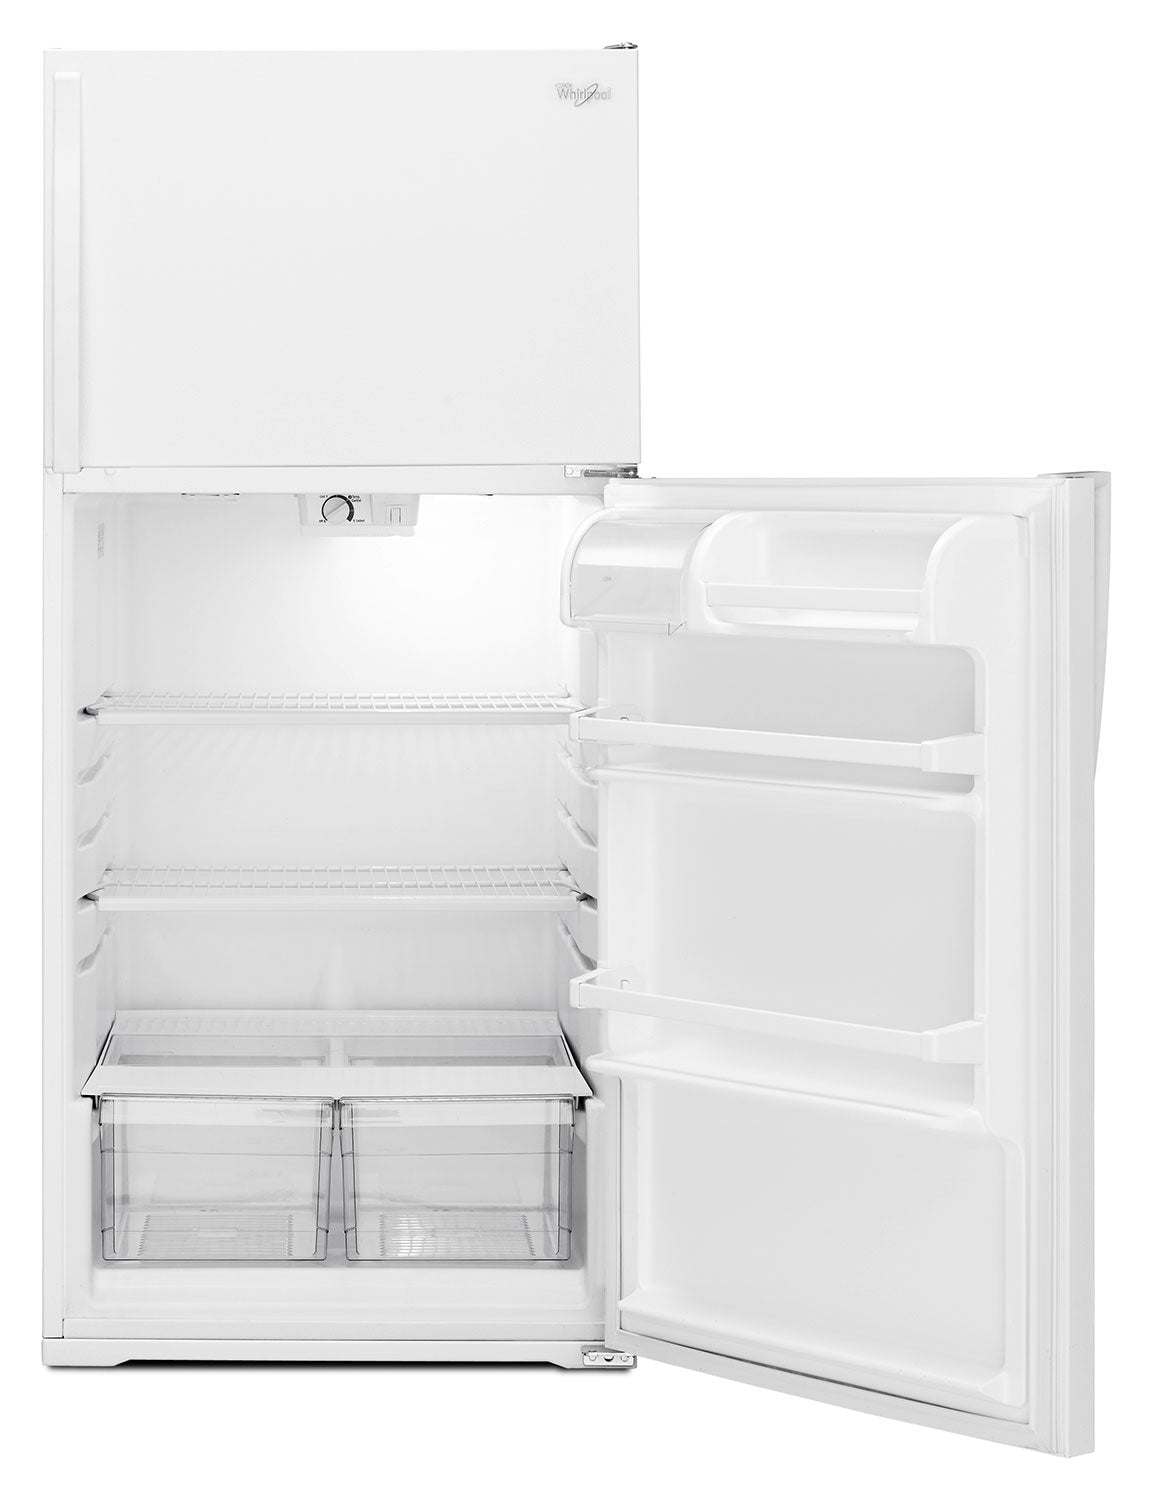 Whirlpool White Top-Freezer Refrigerator (14.3 Cu. Ft.) - WRT134TFDW